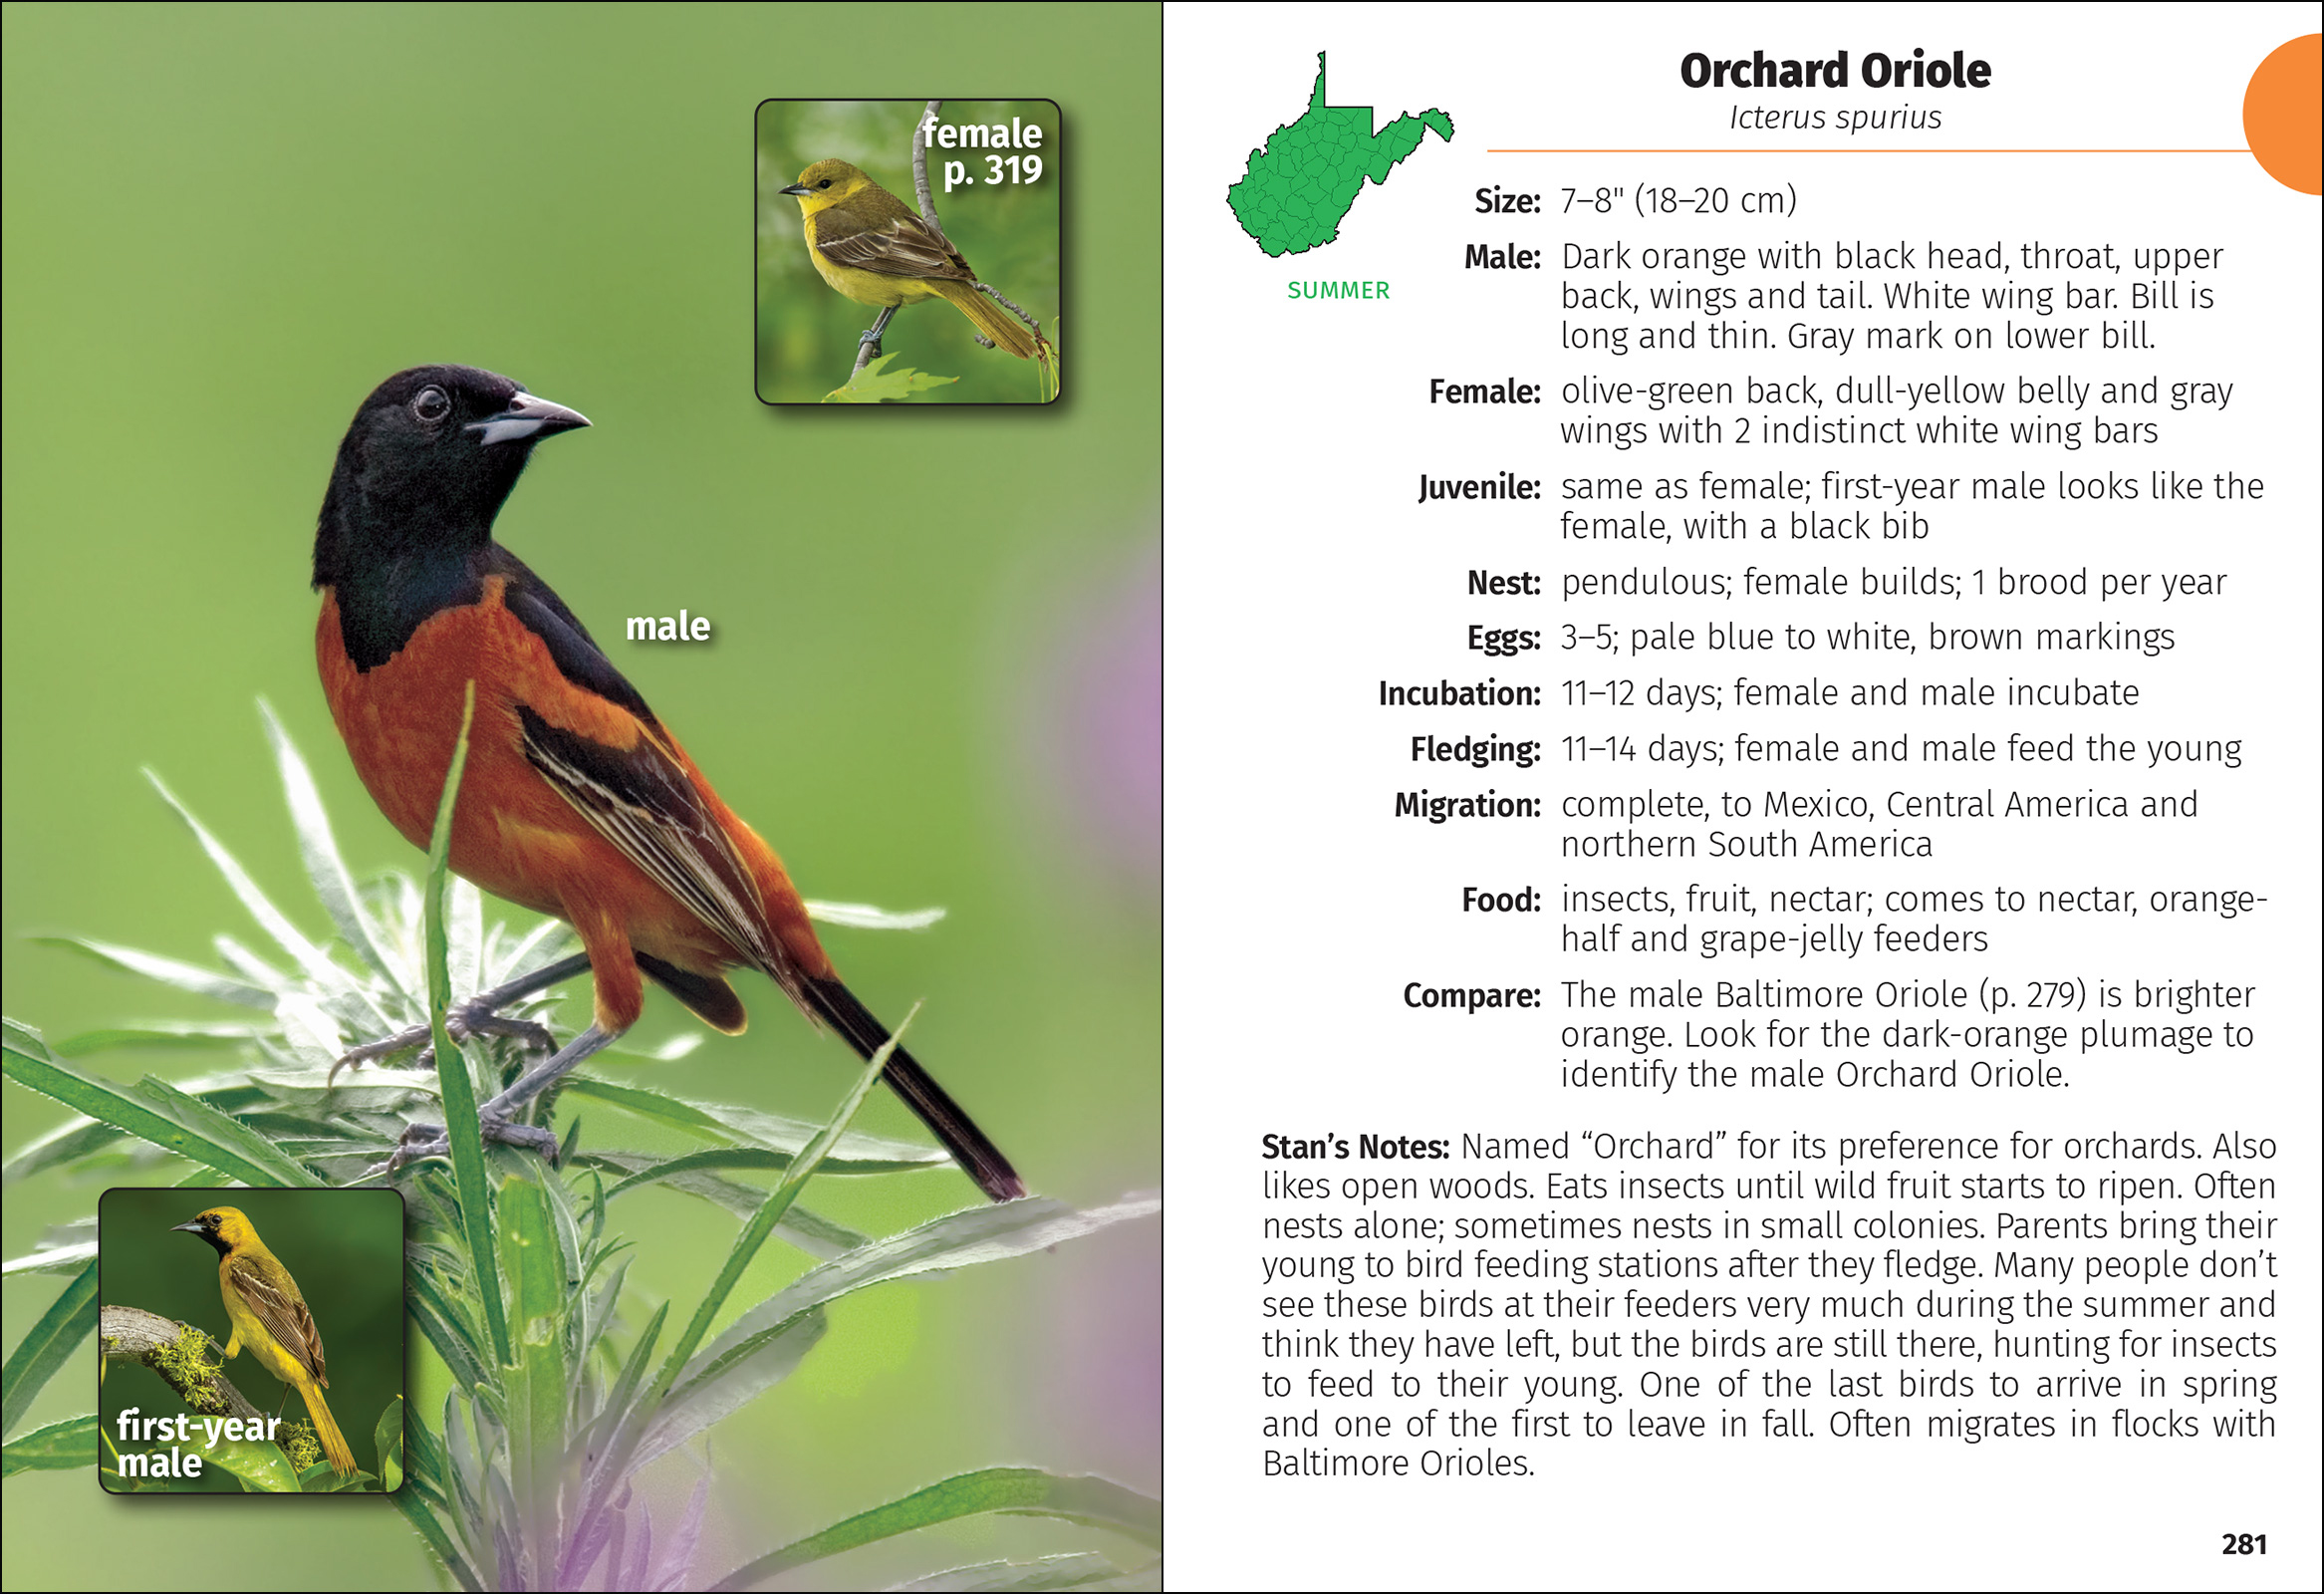 Birds of West Virginia Field Guide